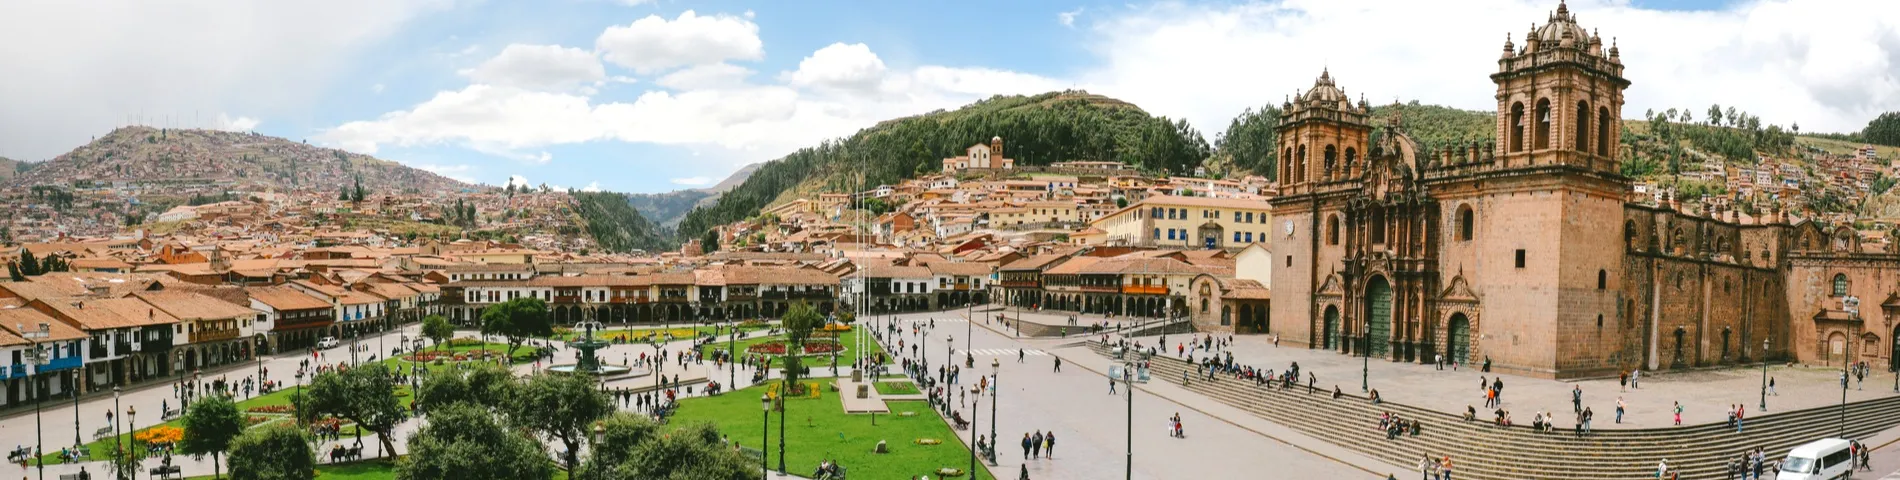 Cuzco - General